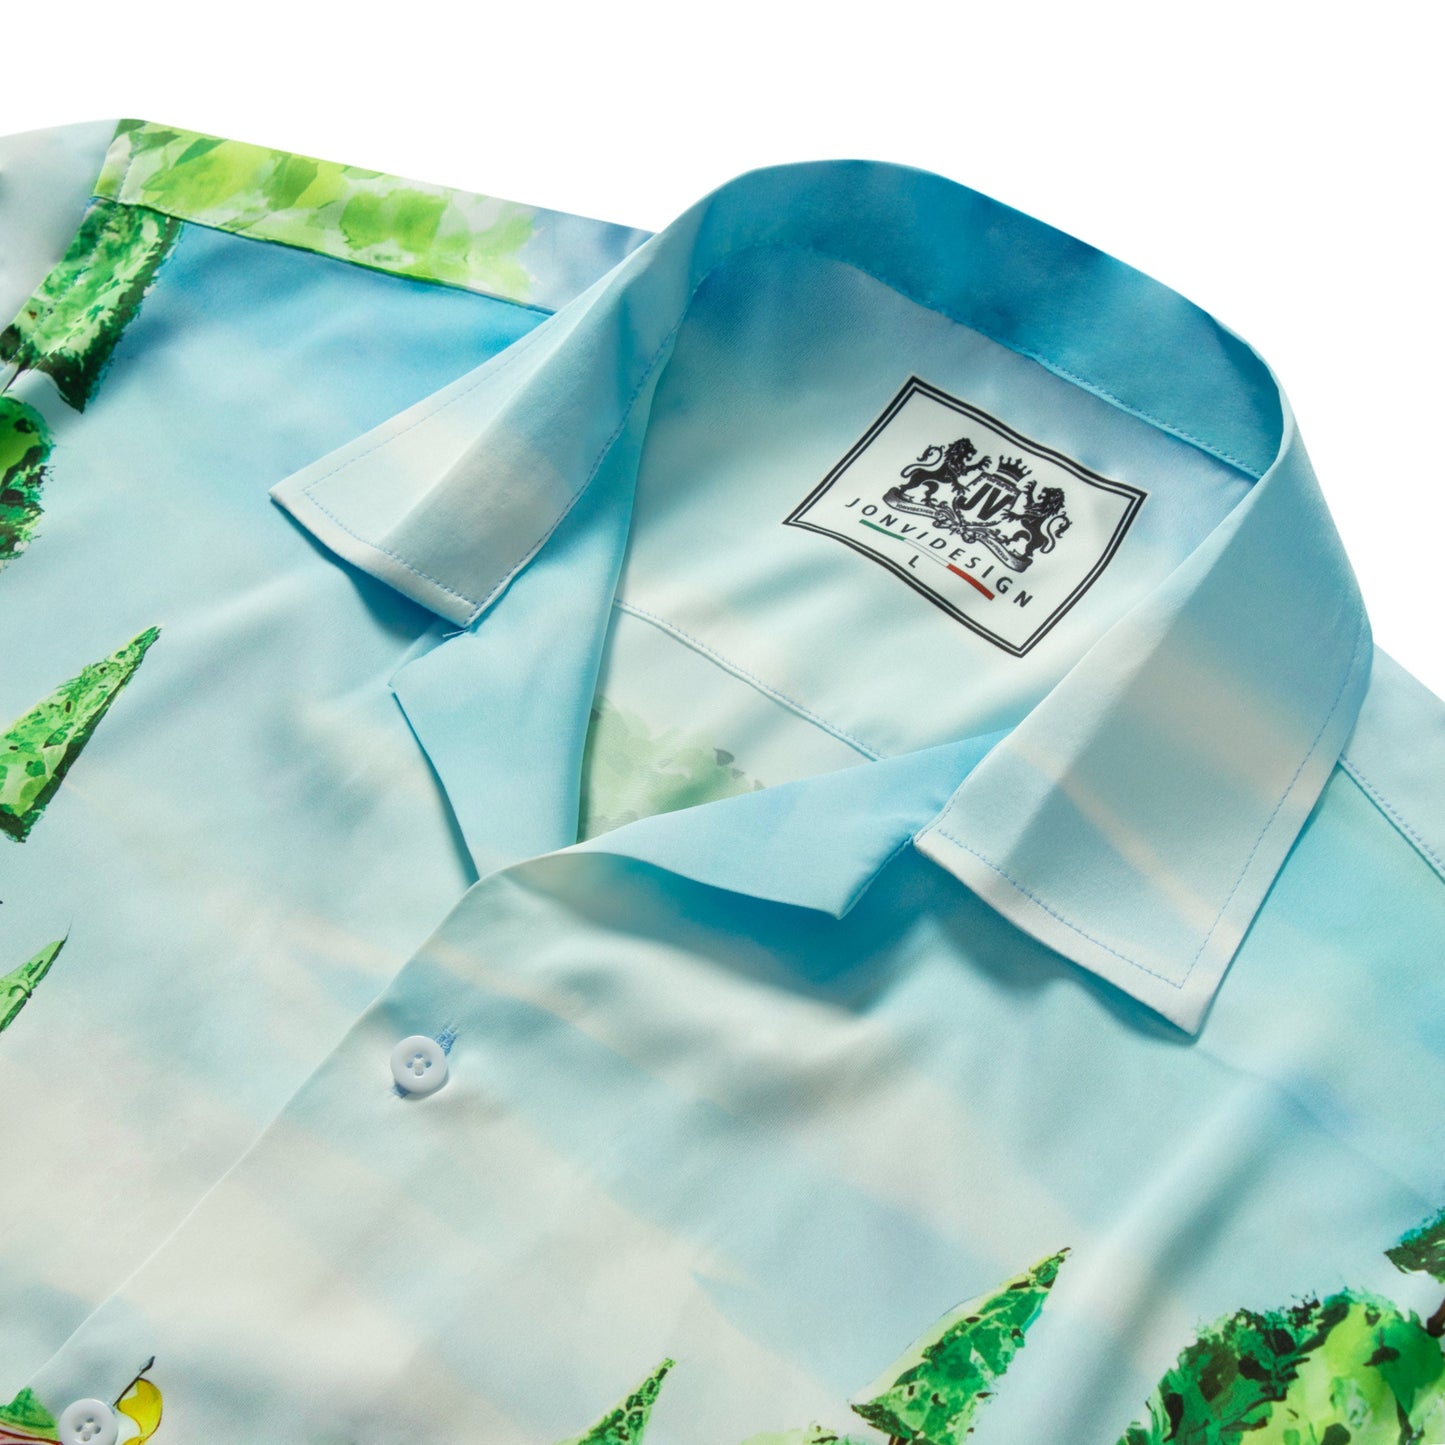 Garden Natural Pattern Short Sleeve Casual Shirt for Men Jonvidesign